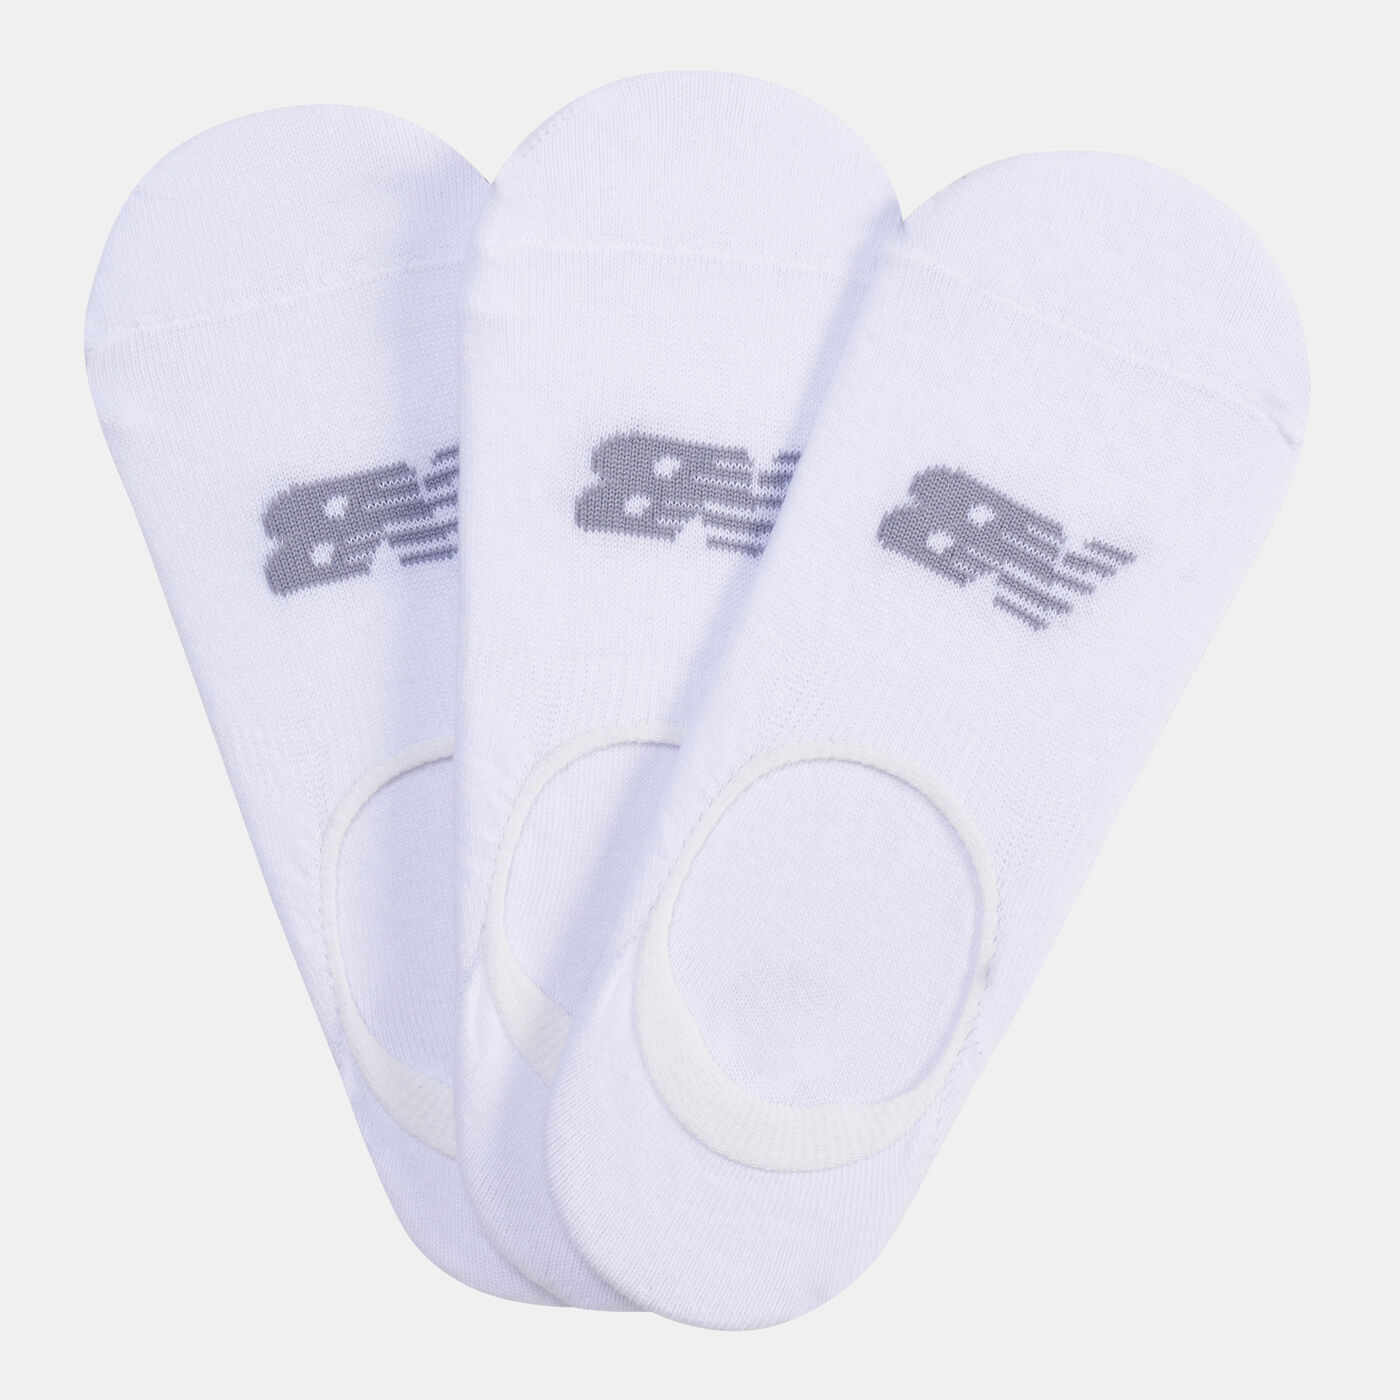 Performance Unseen Liner Socks (3 Pack)